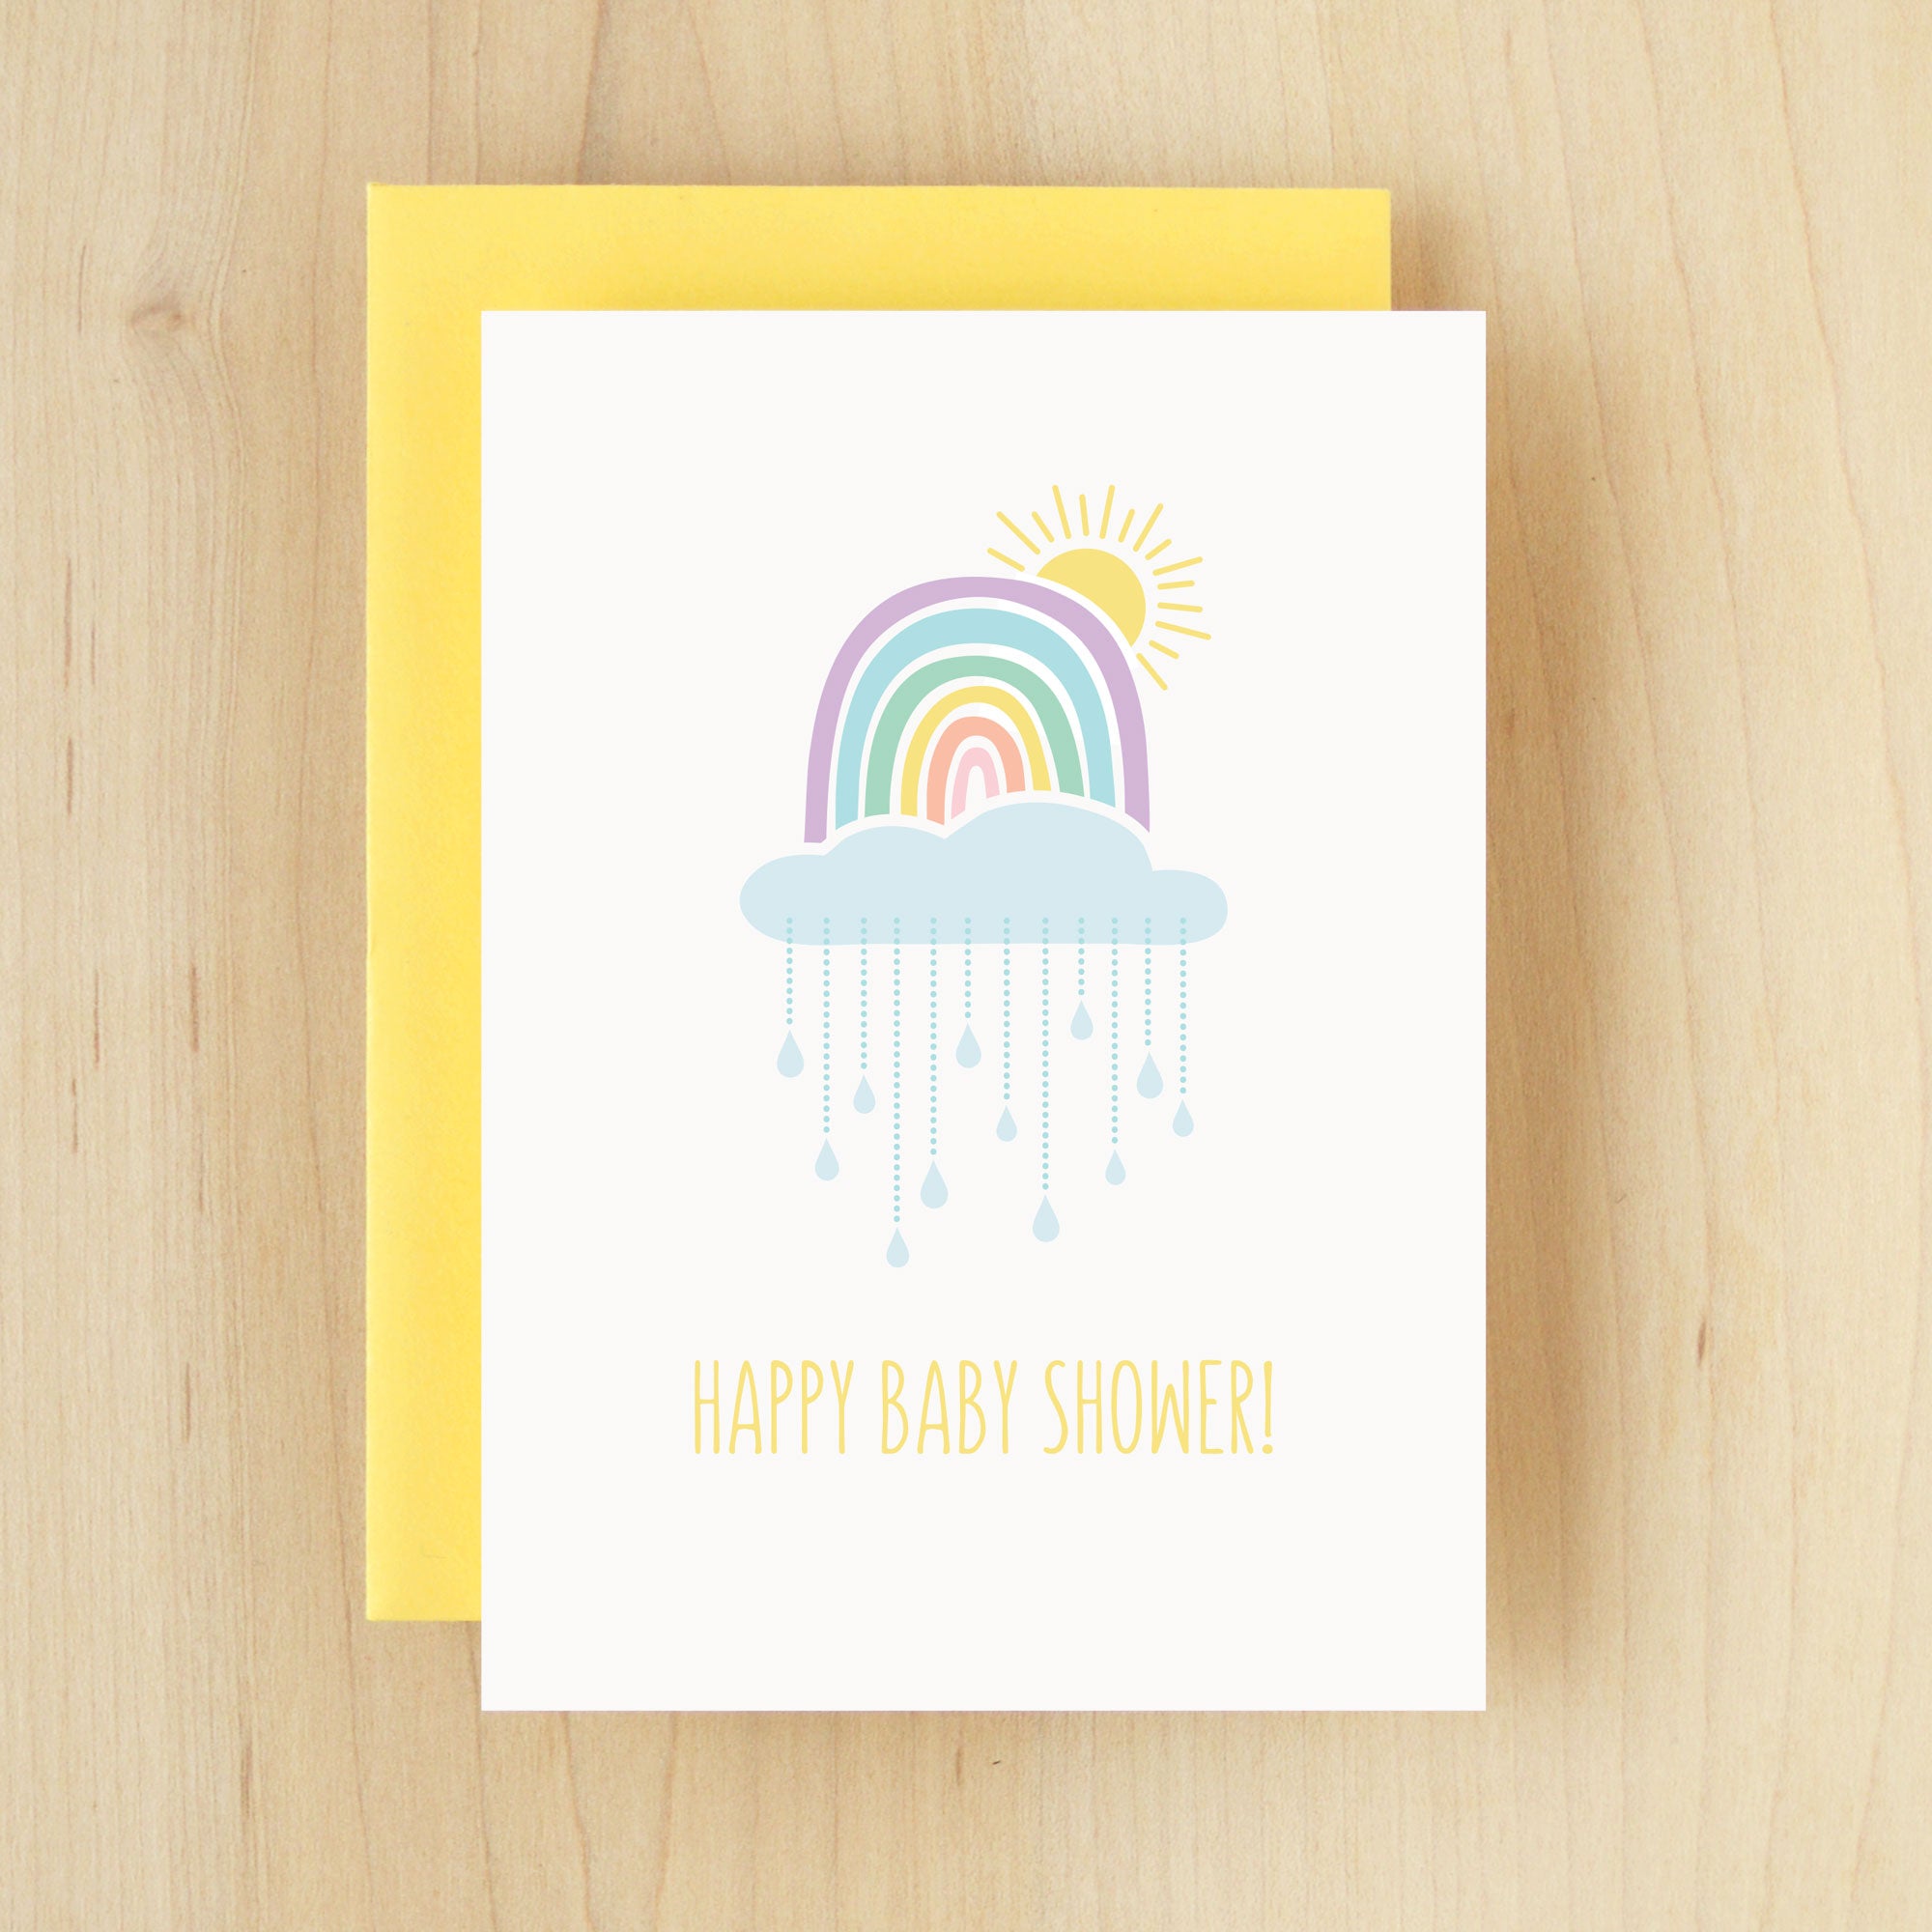 Rainbow friends cute blue baby | Greeting Card